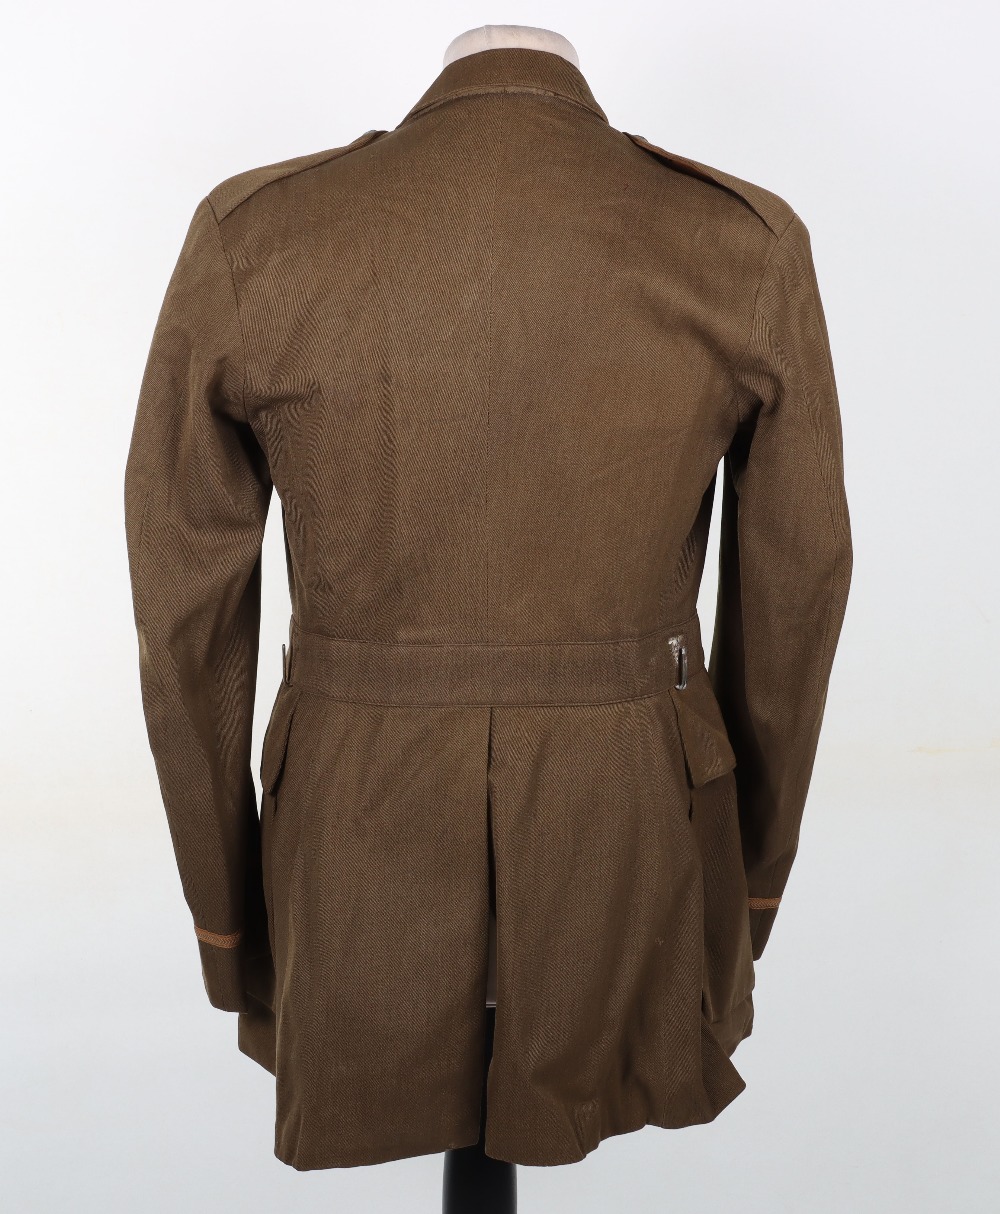 Rare WW1 British Royal Artillery Officers Cuff Rank Tunic of a British Latin American Volunteer - Image 8 of 9